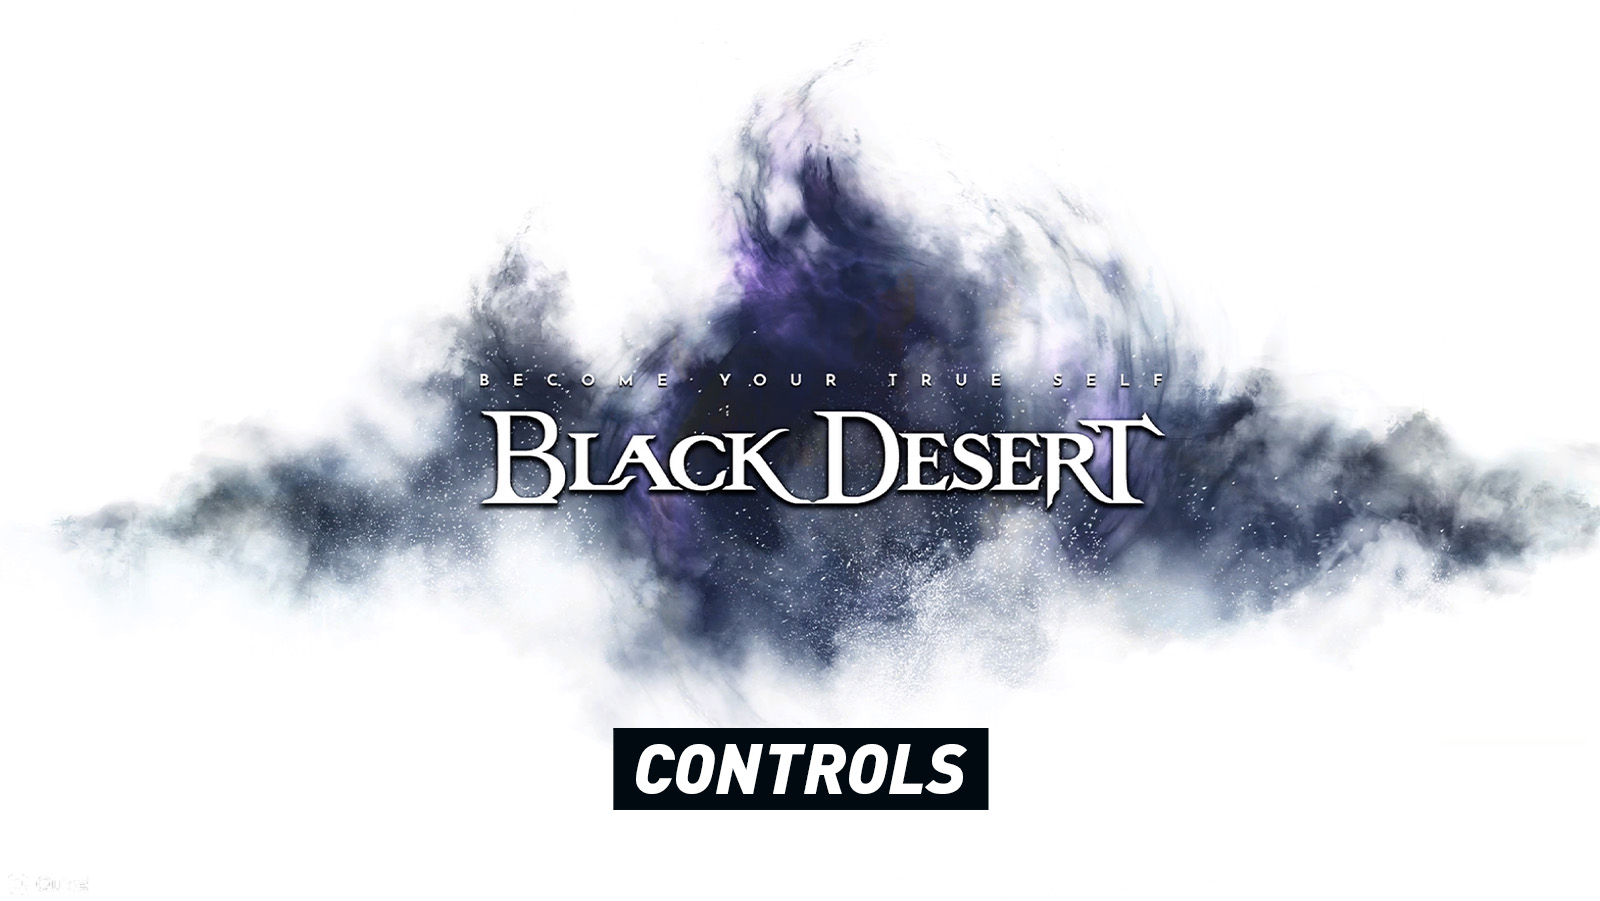 Black Desert – Controls